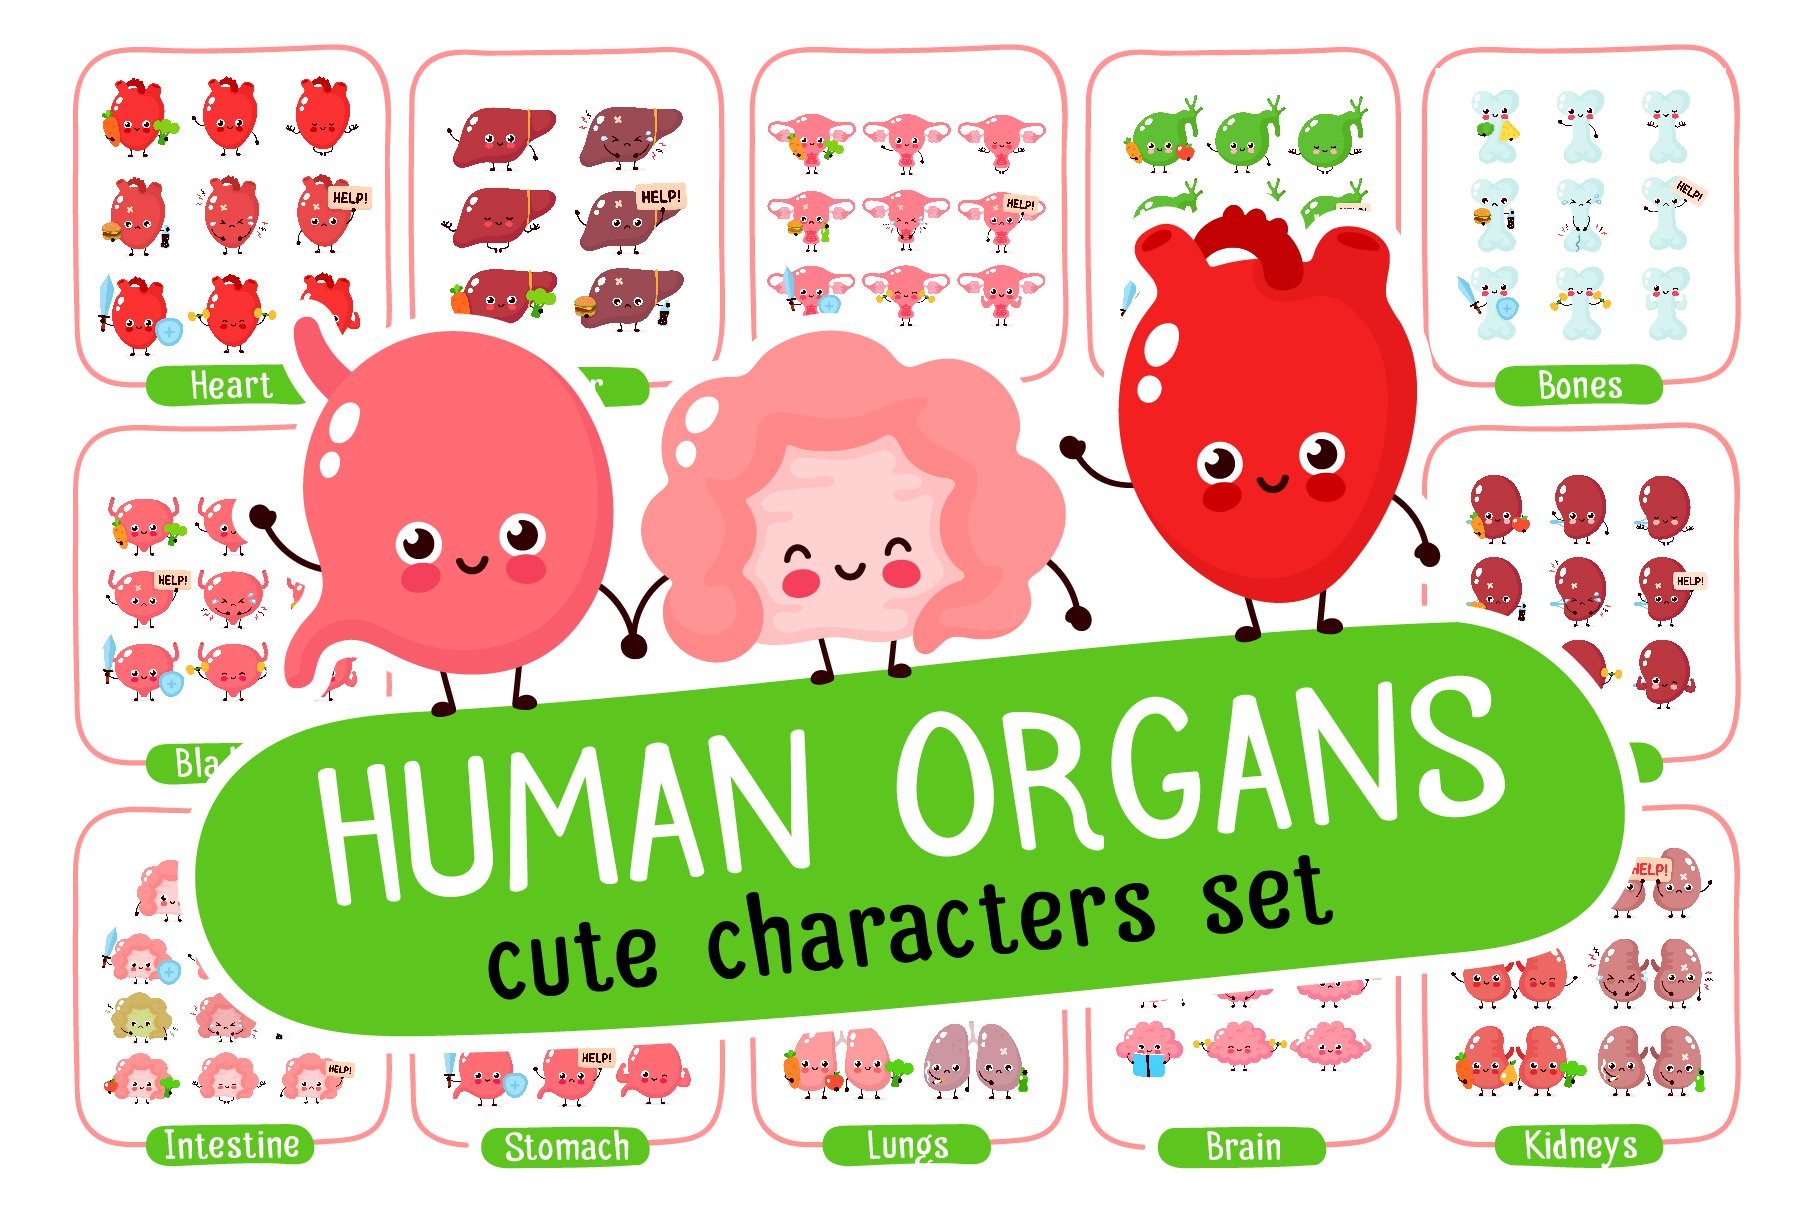 Cute human organs set cover image.